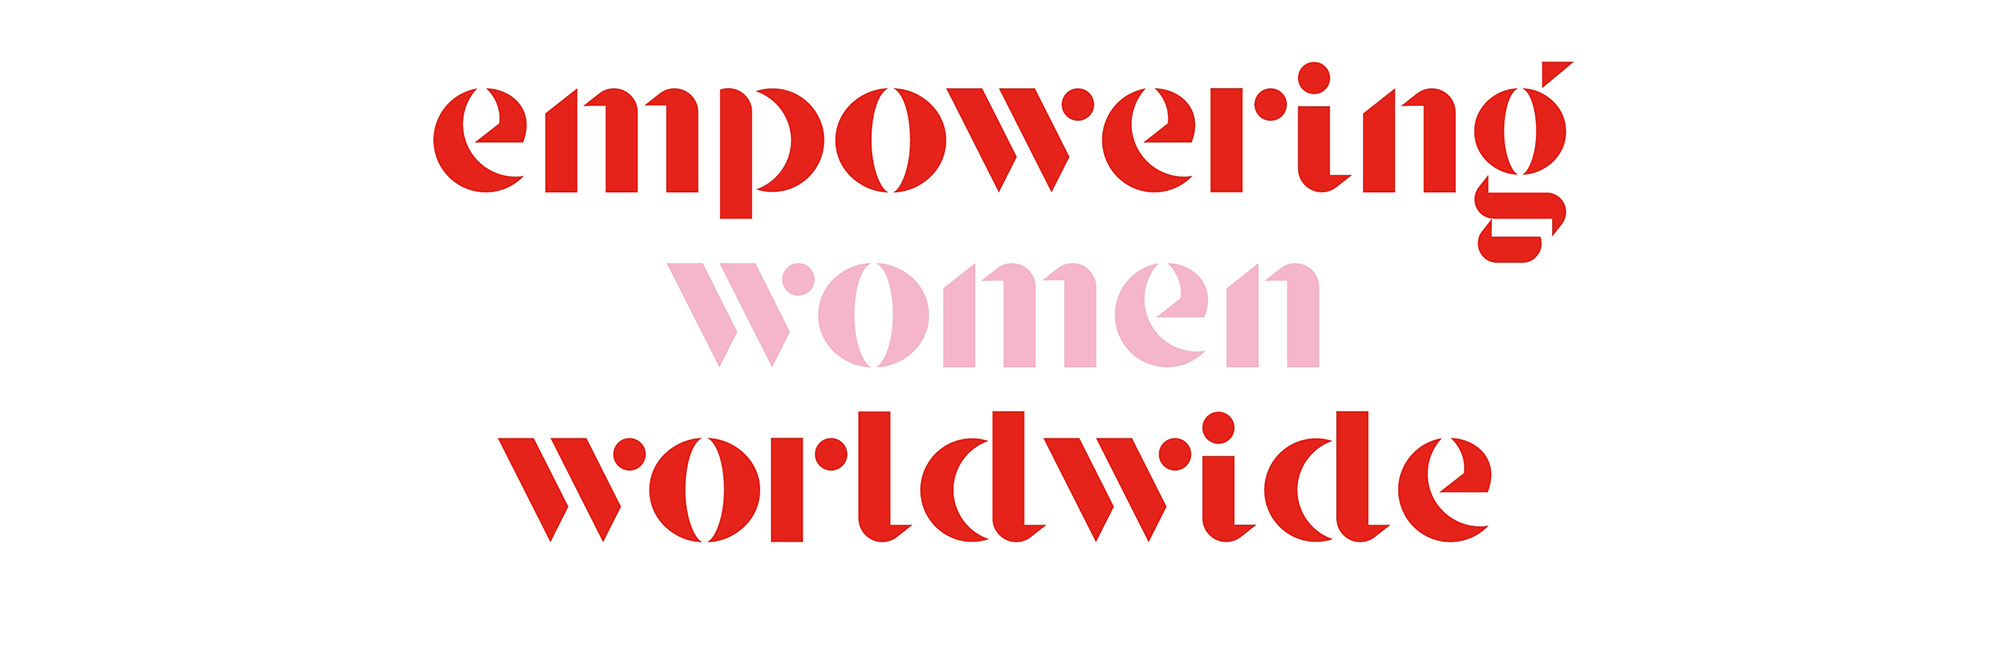 empowering women worldwide